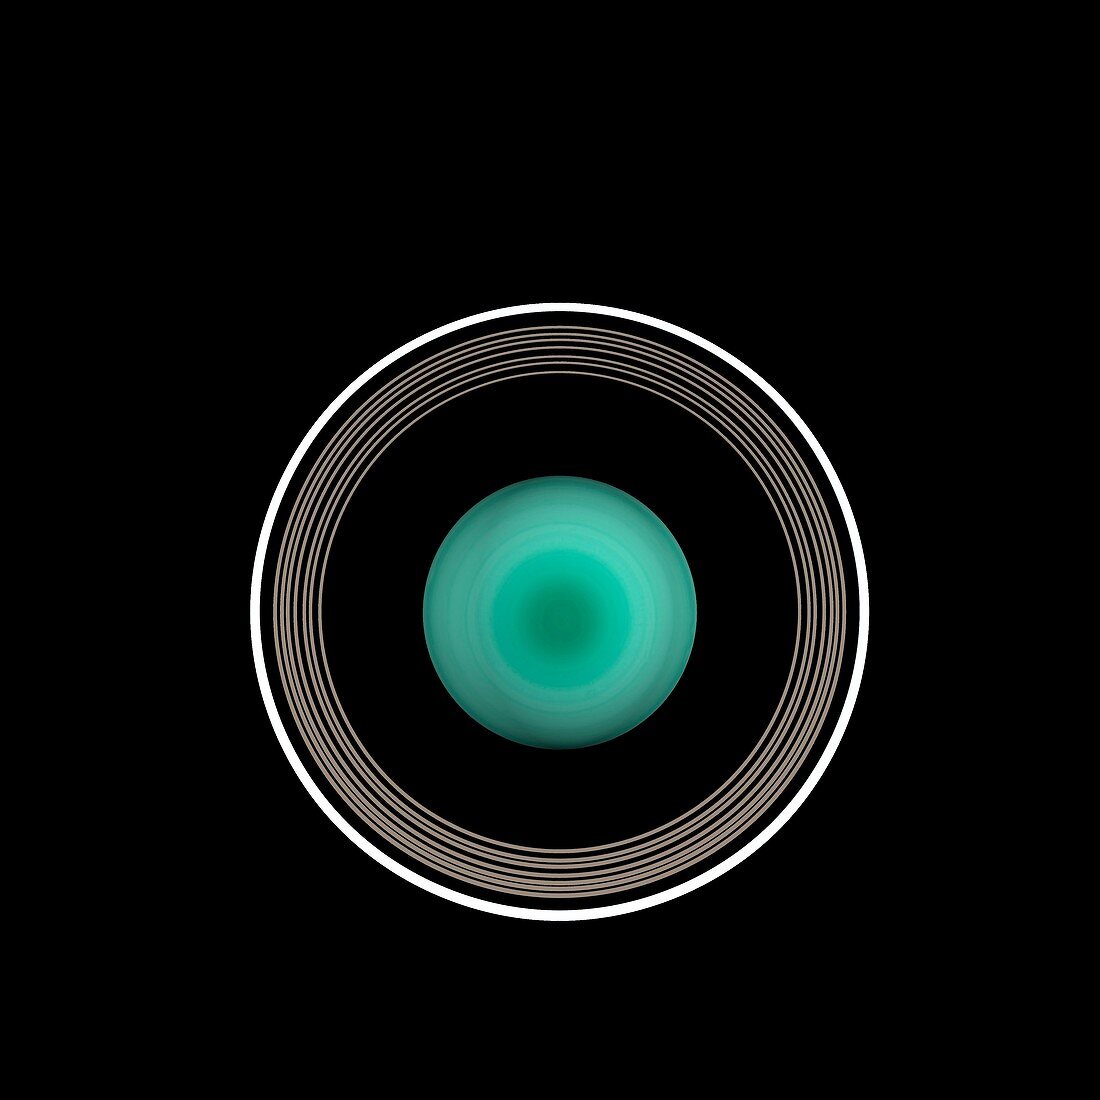 Uranus and its rings, illustration